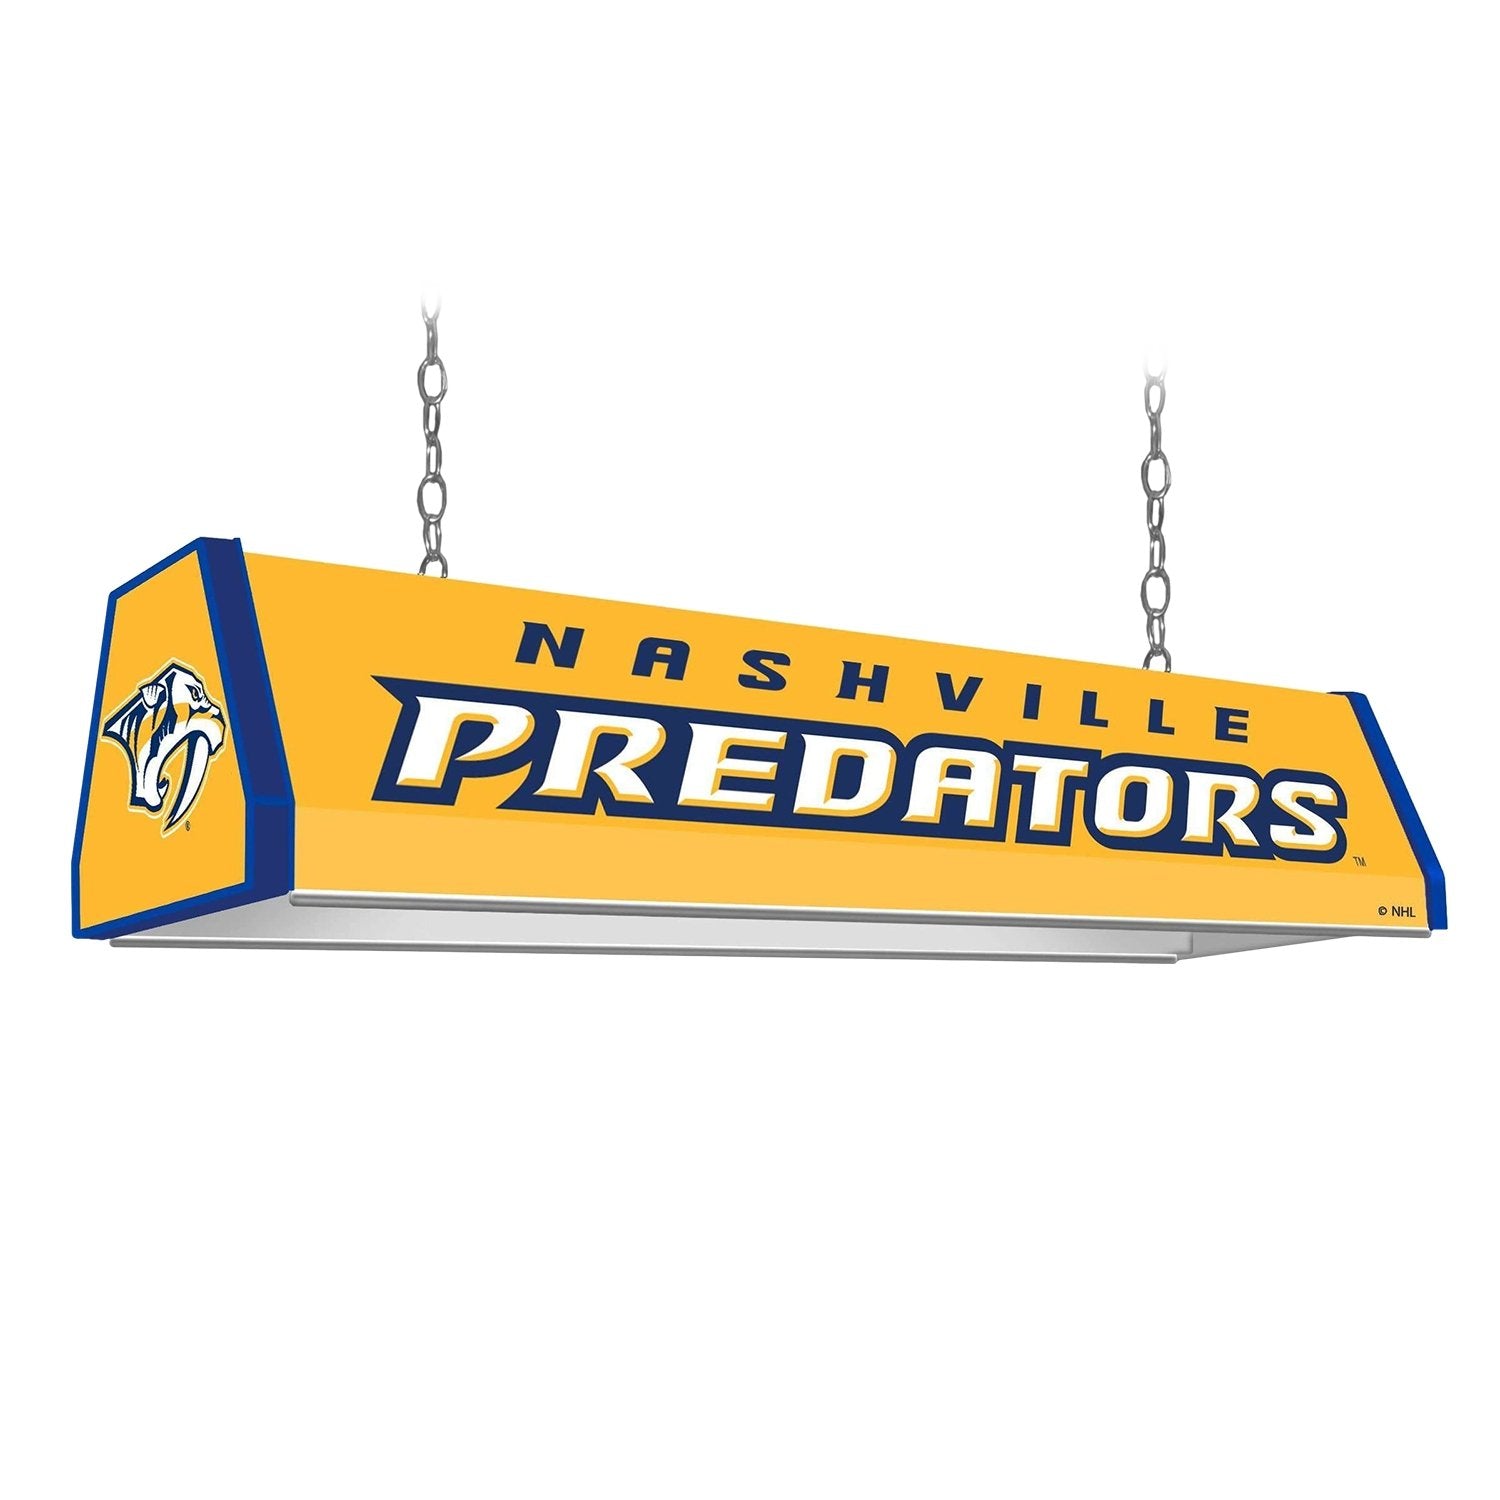 Nashville Predators: Standard Pool Table Light - The Fan-Brand